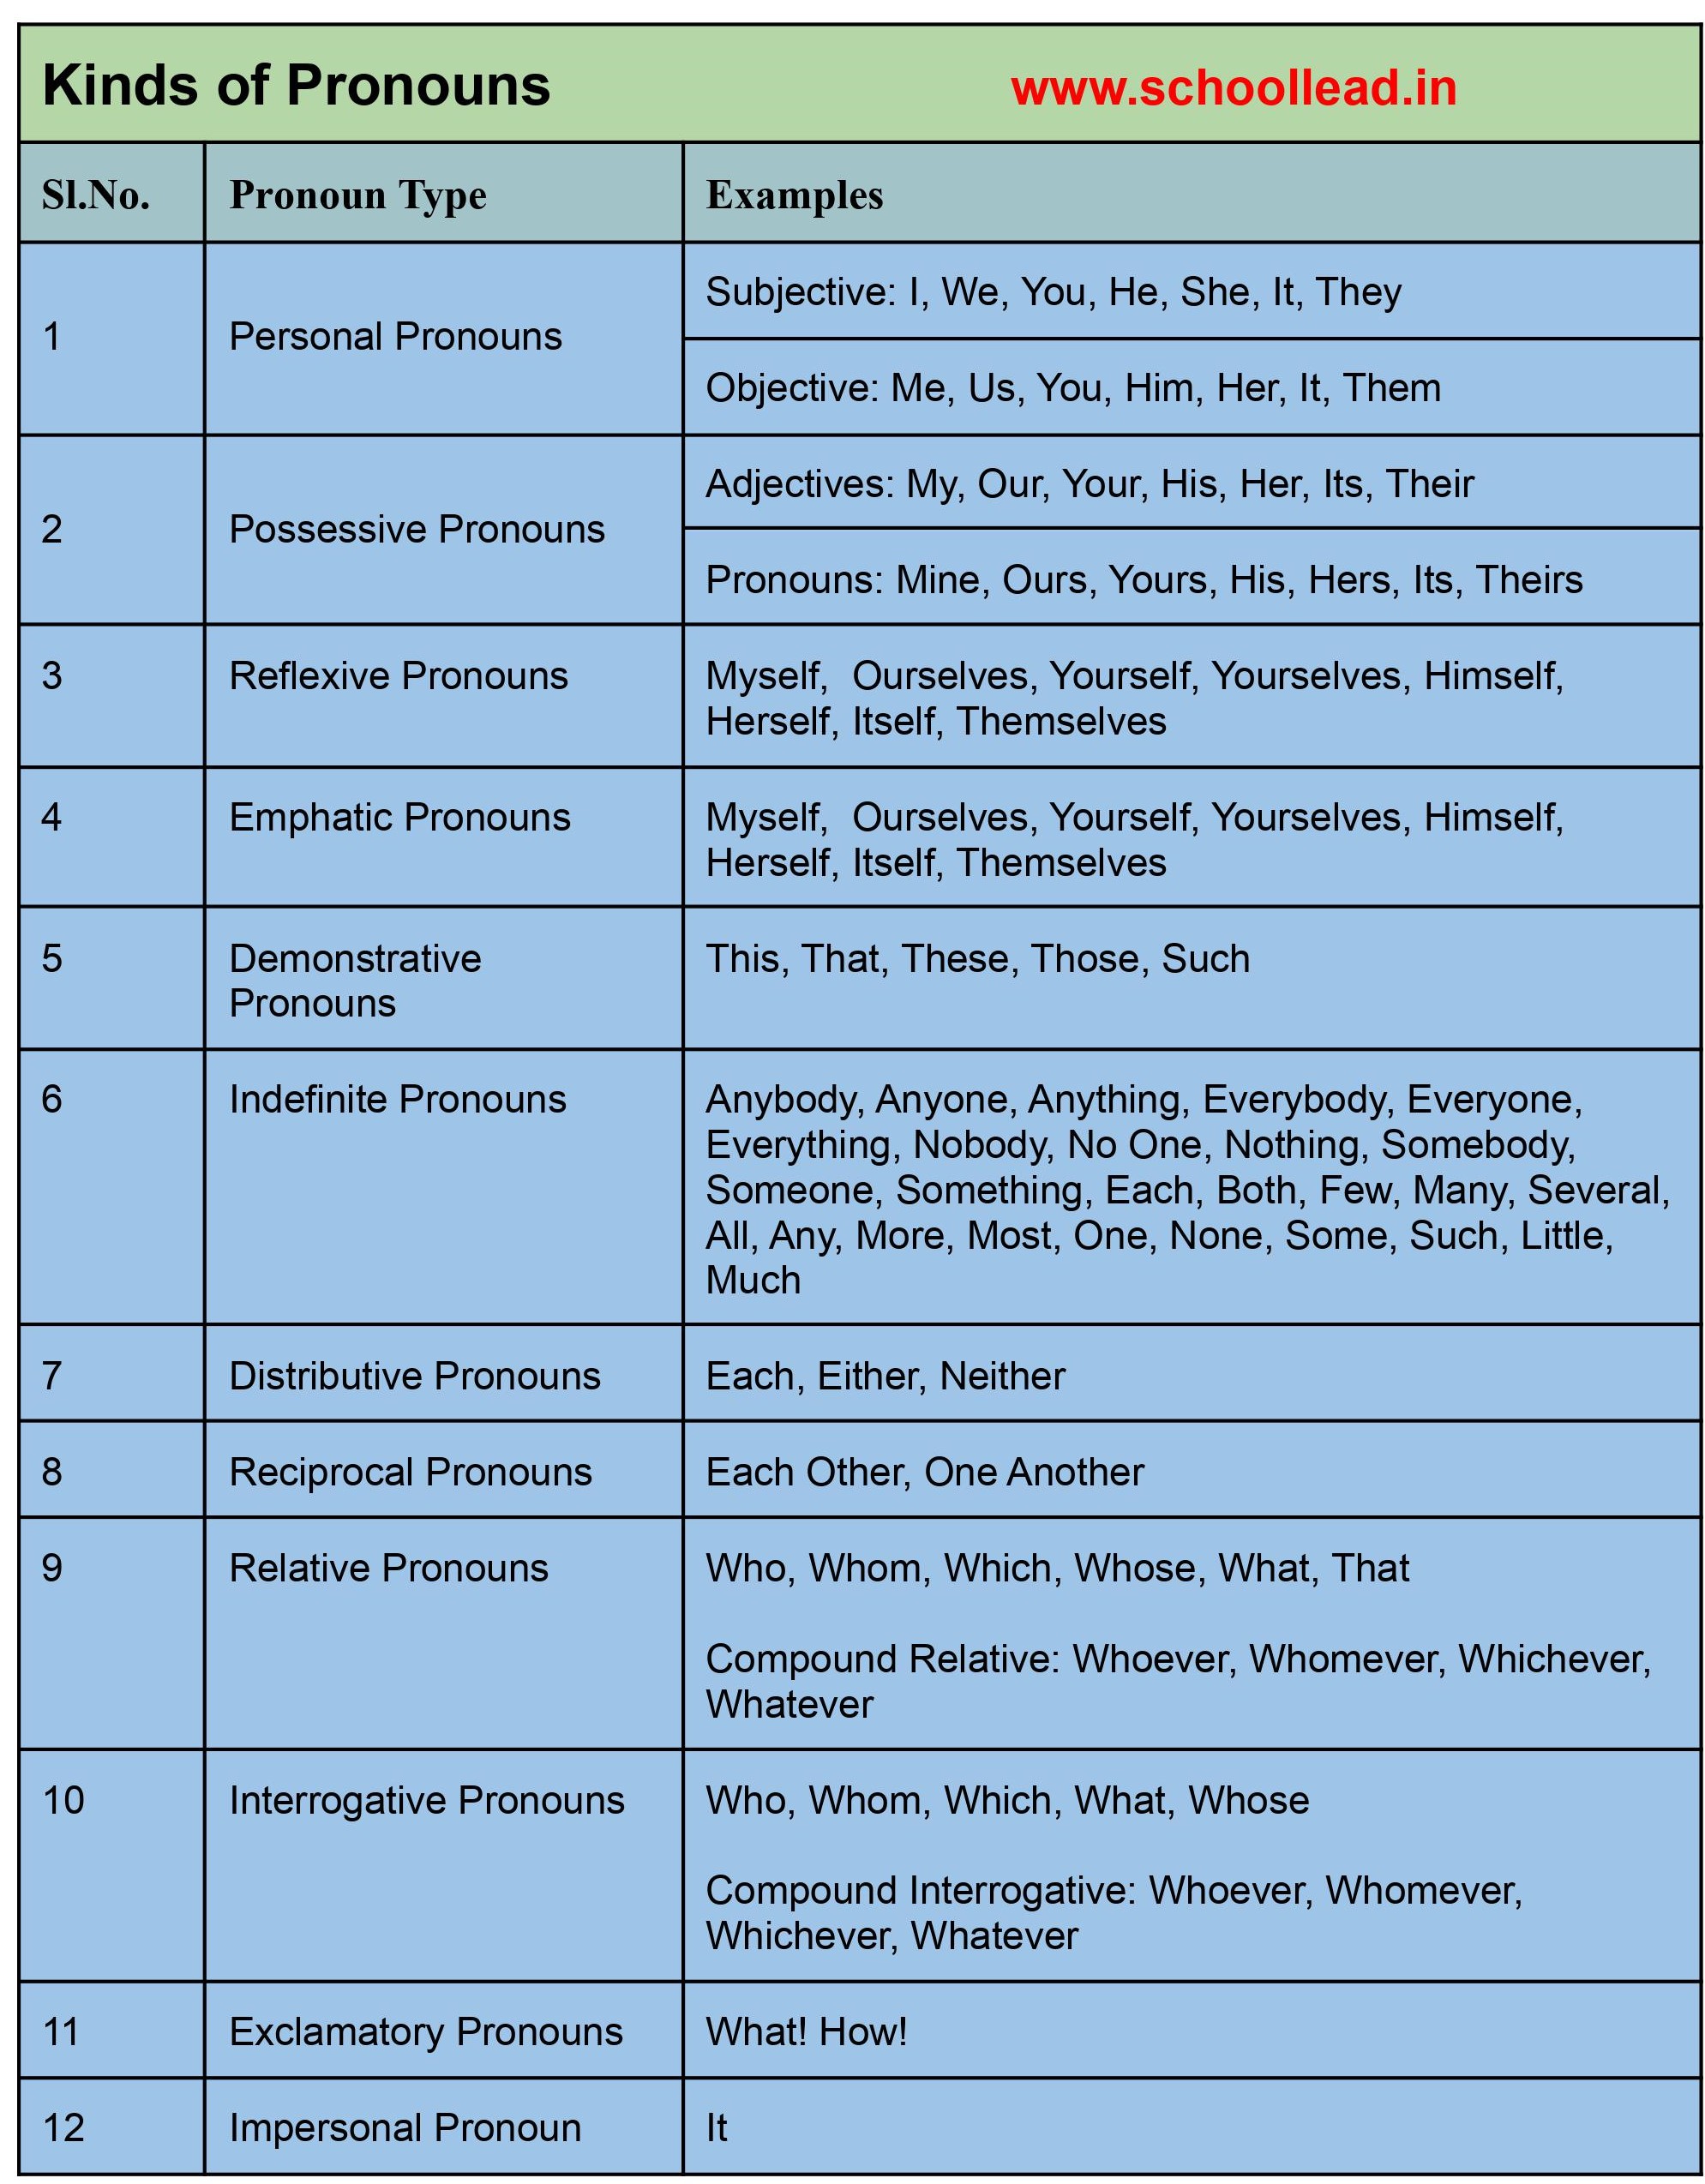 Types Of Pronouns School Lead